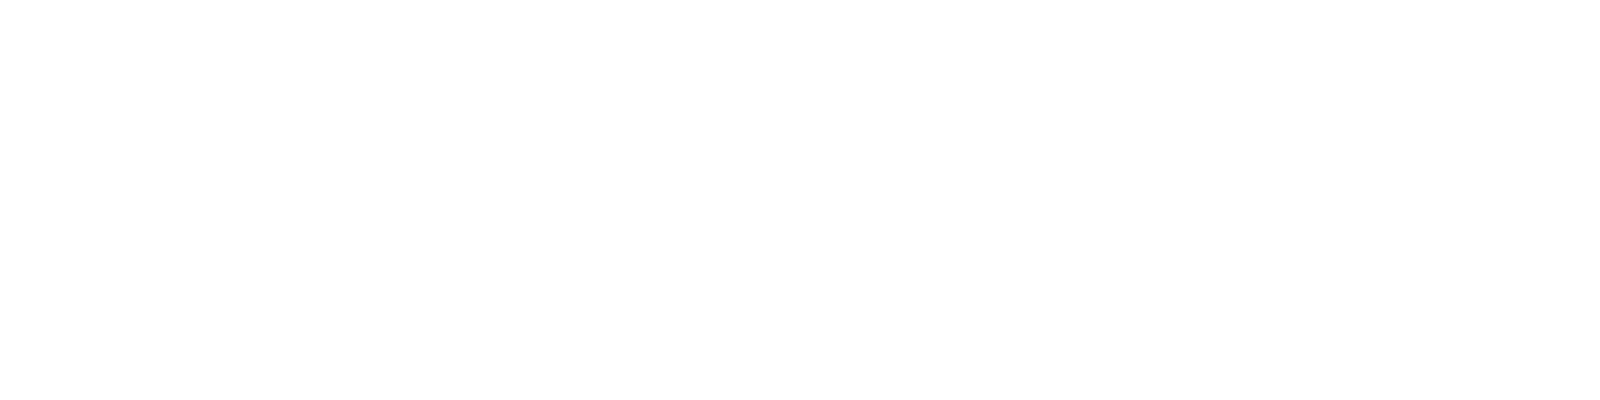 DMP logo white